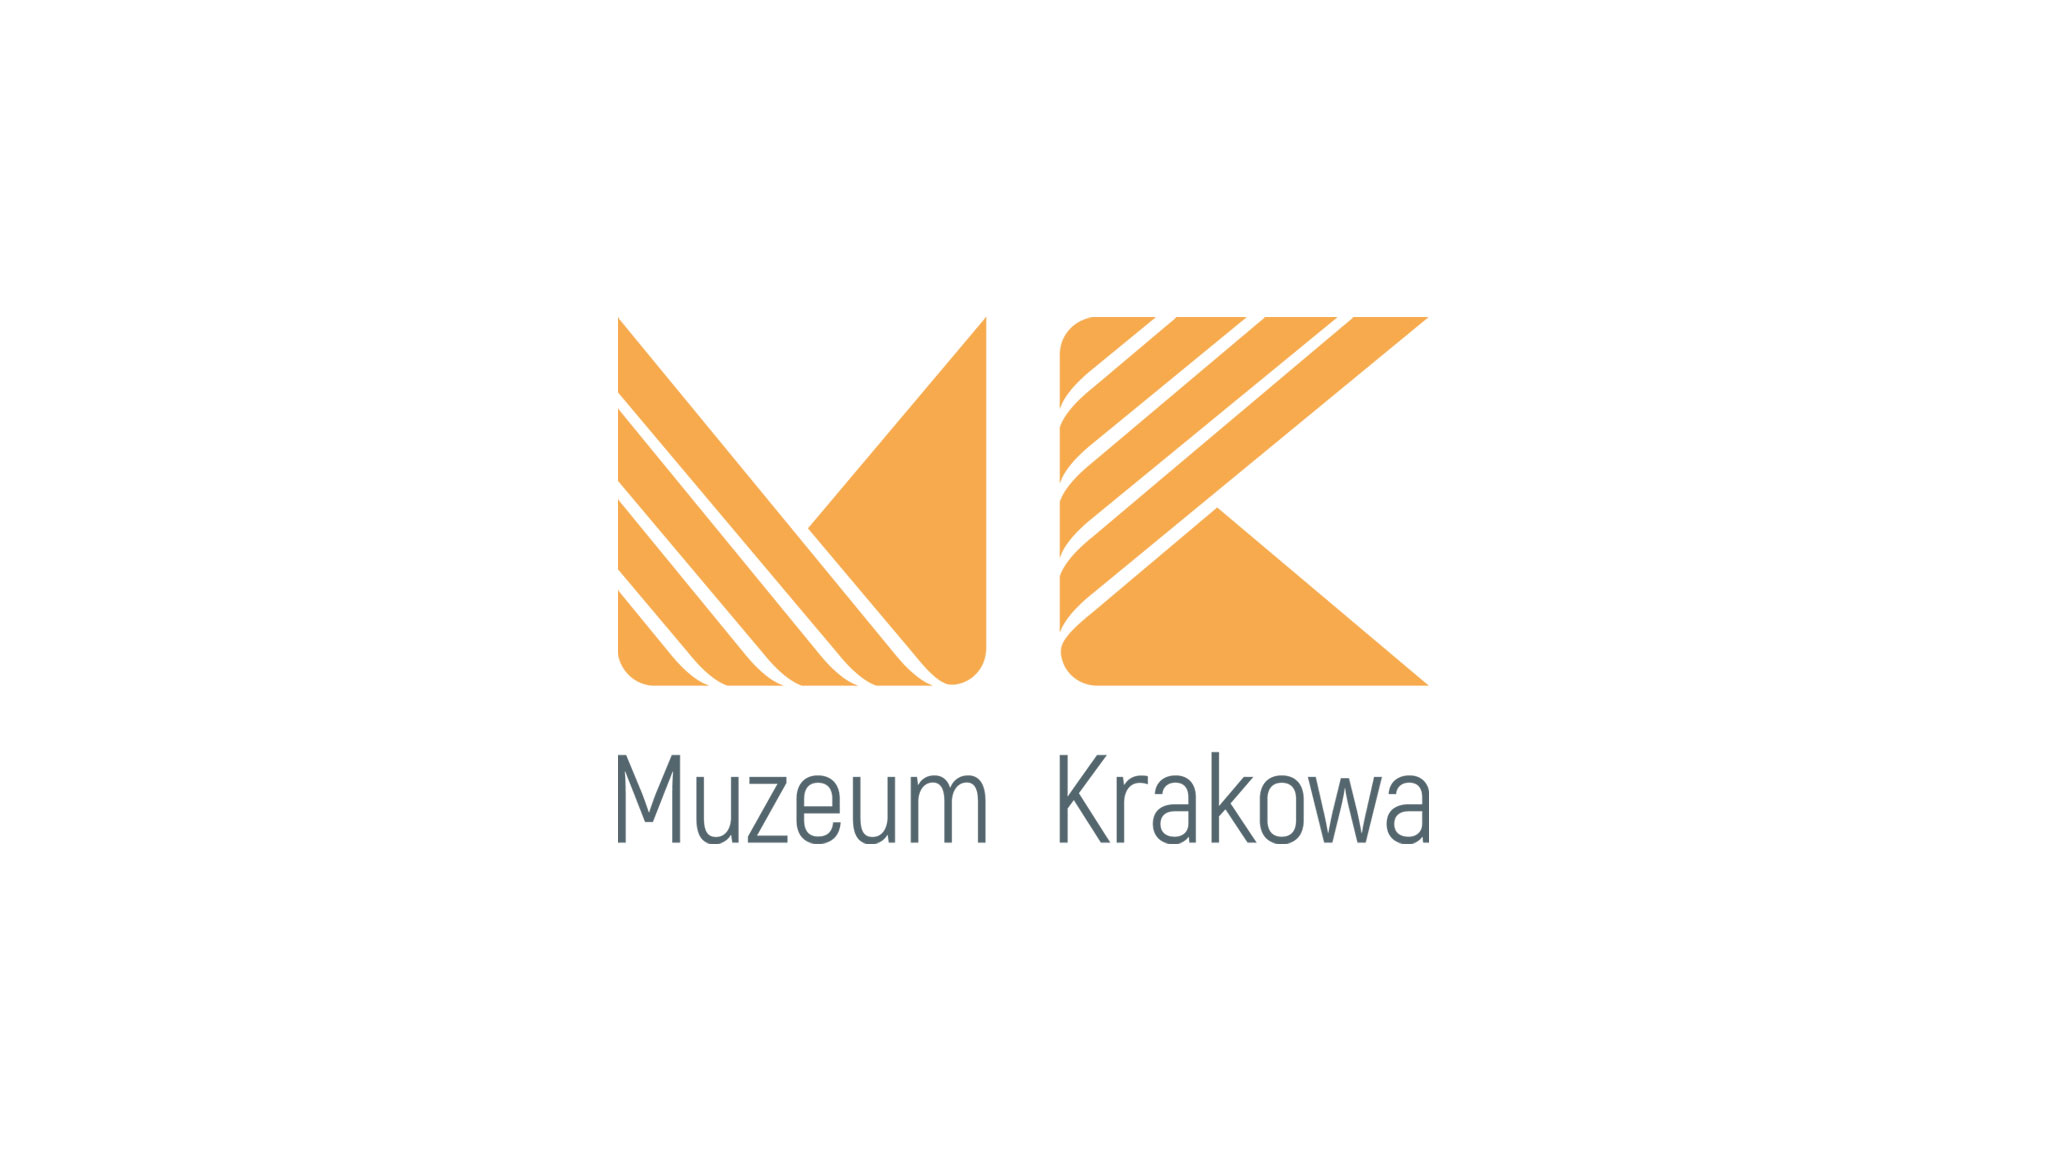 Muzeum Krakowa